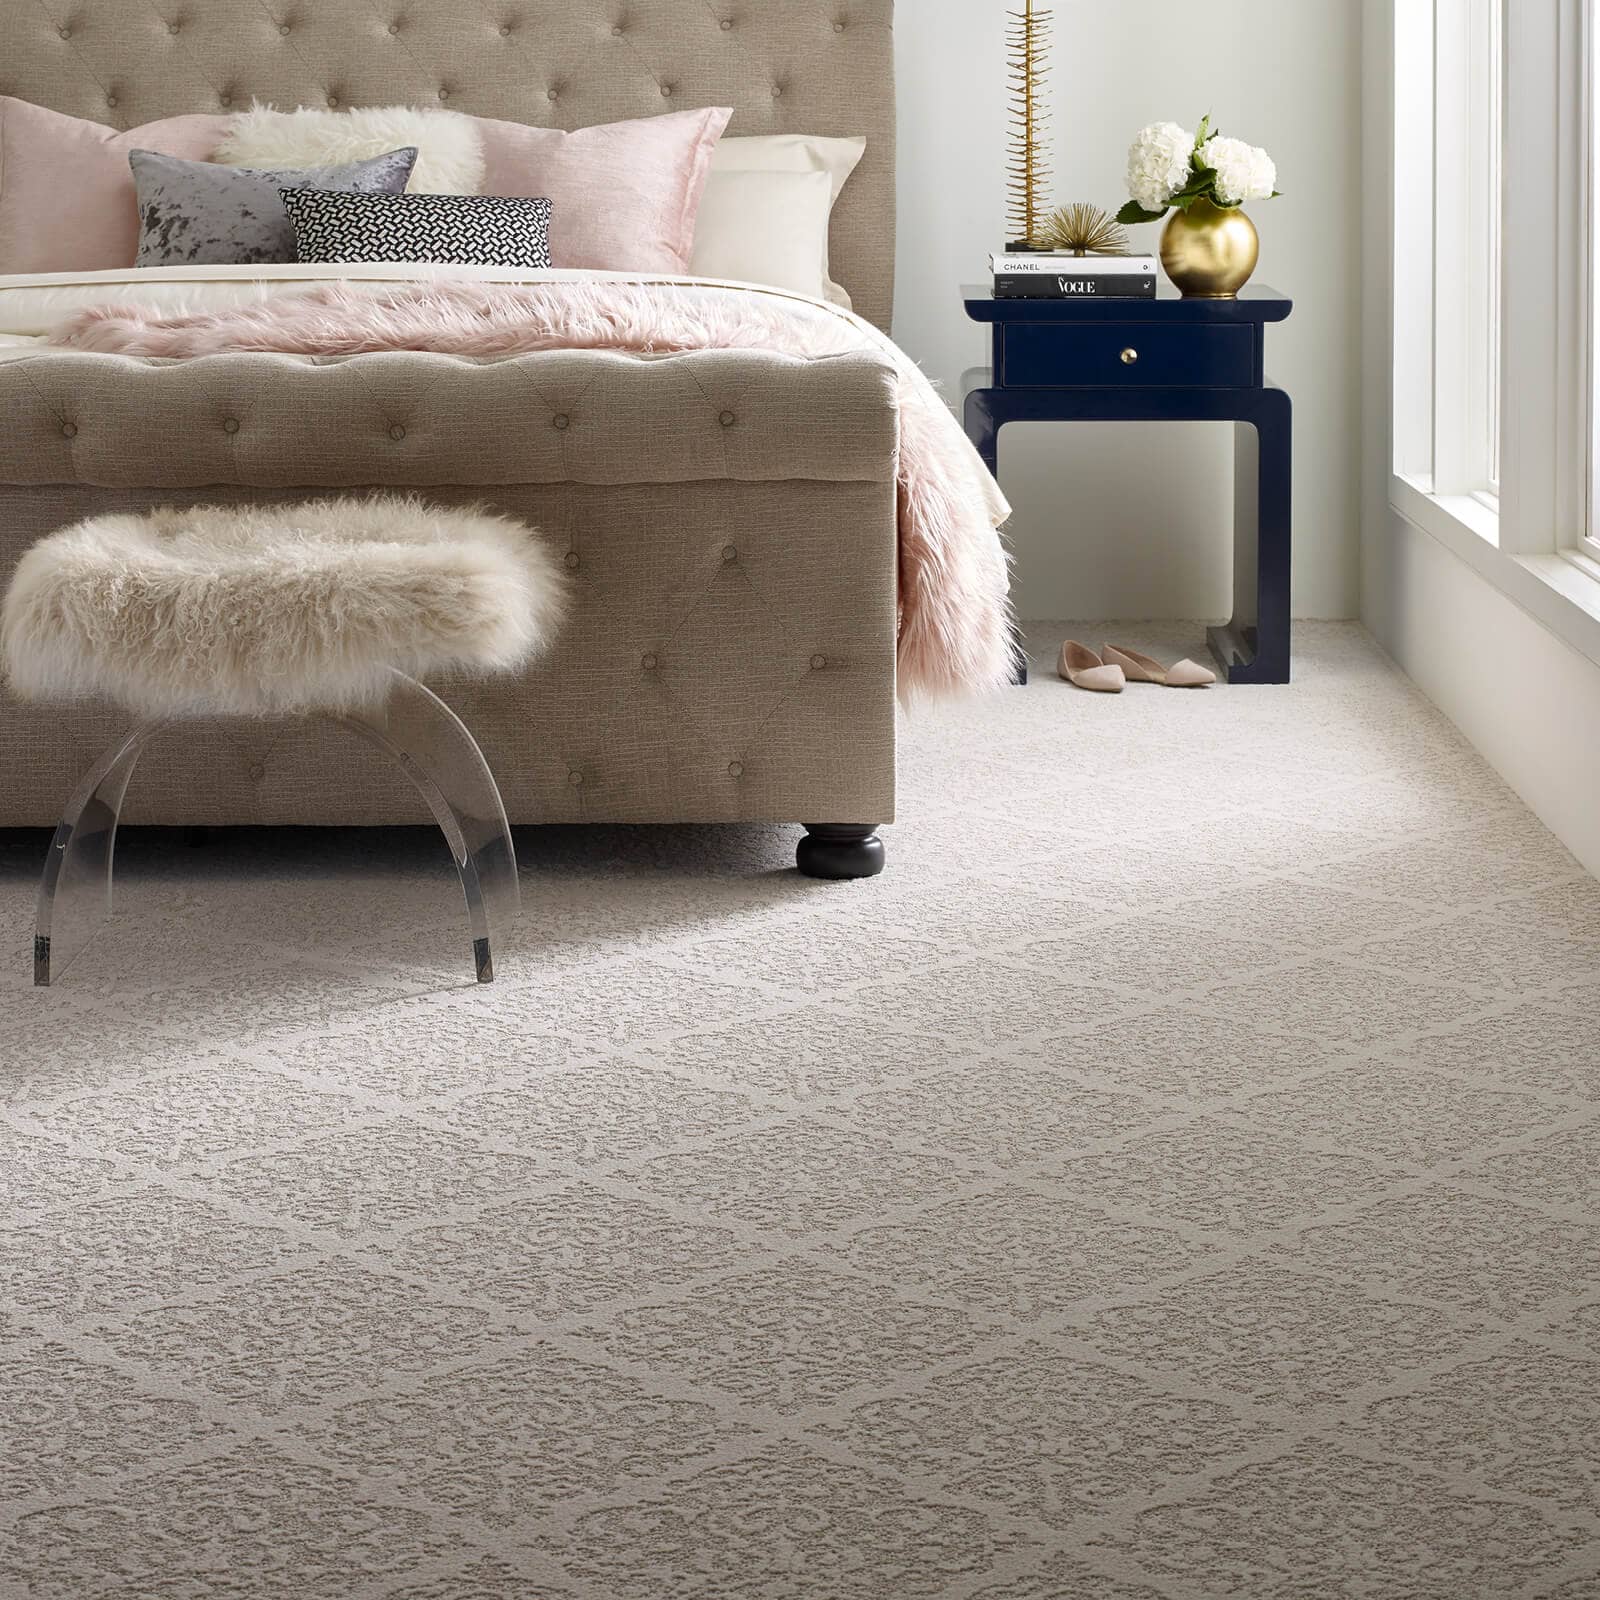 Chateau fare bedroom flooring | AJ Rose Carpets